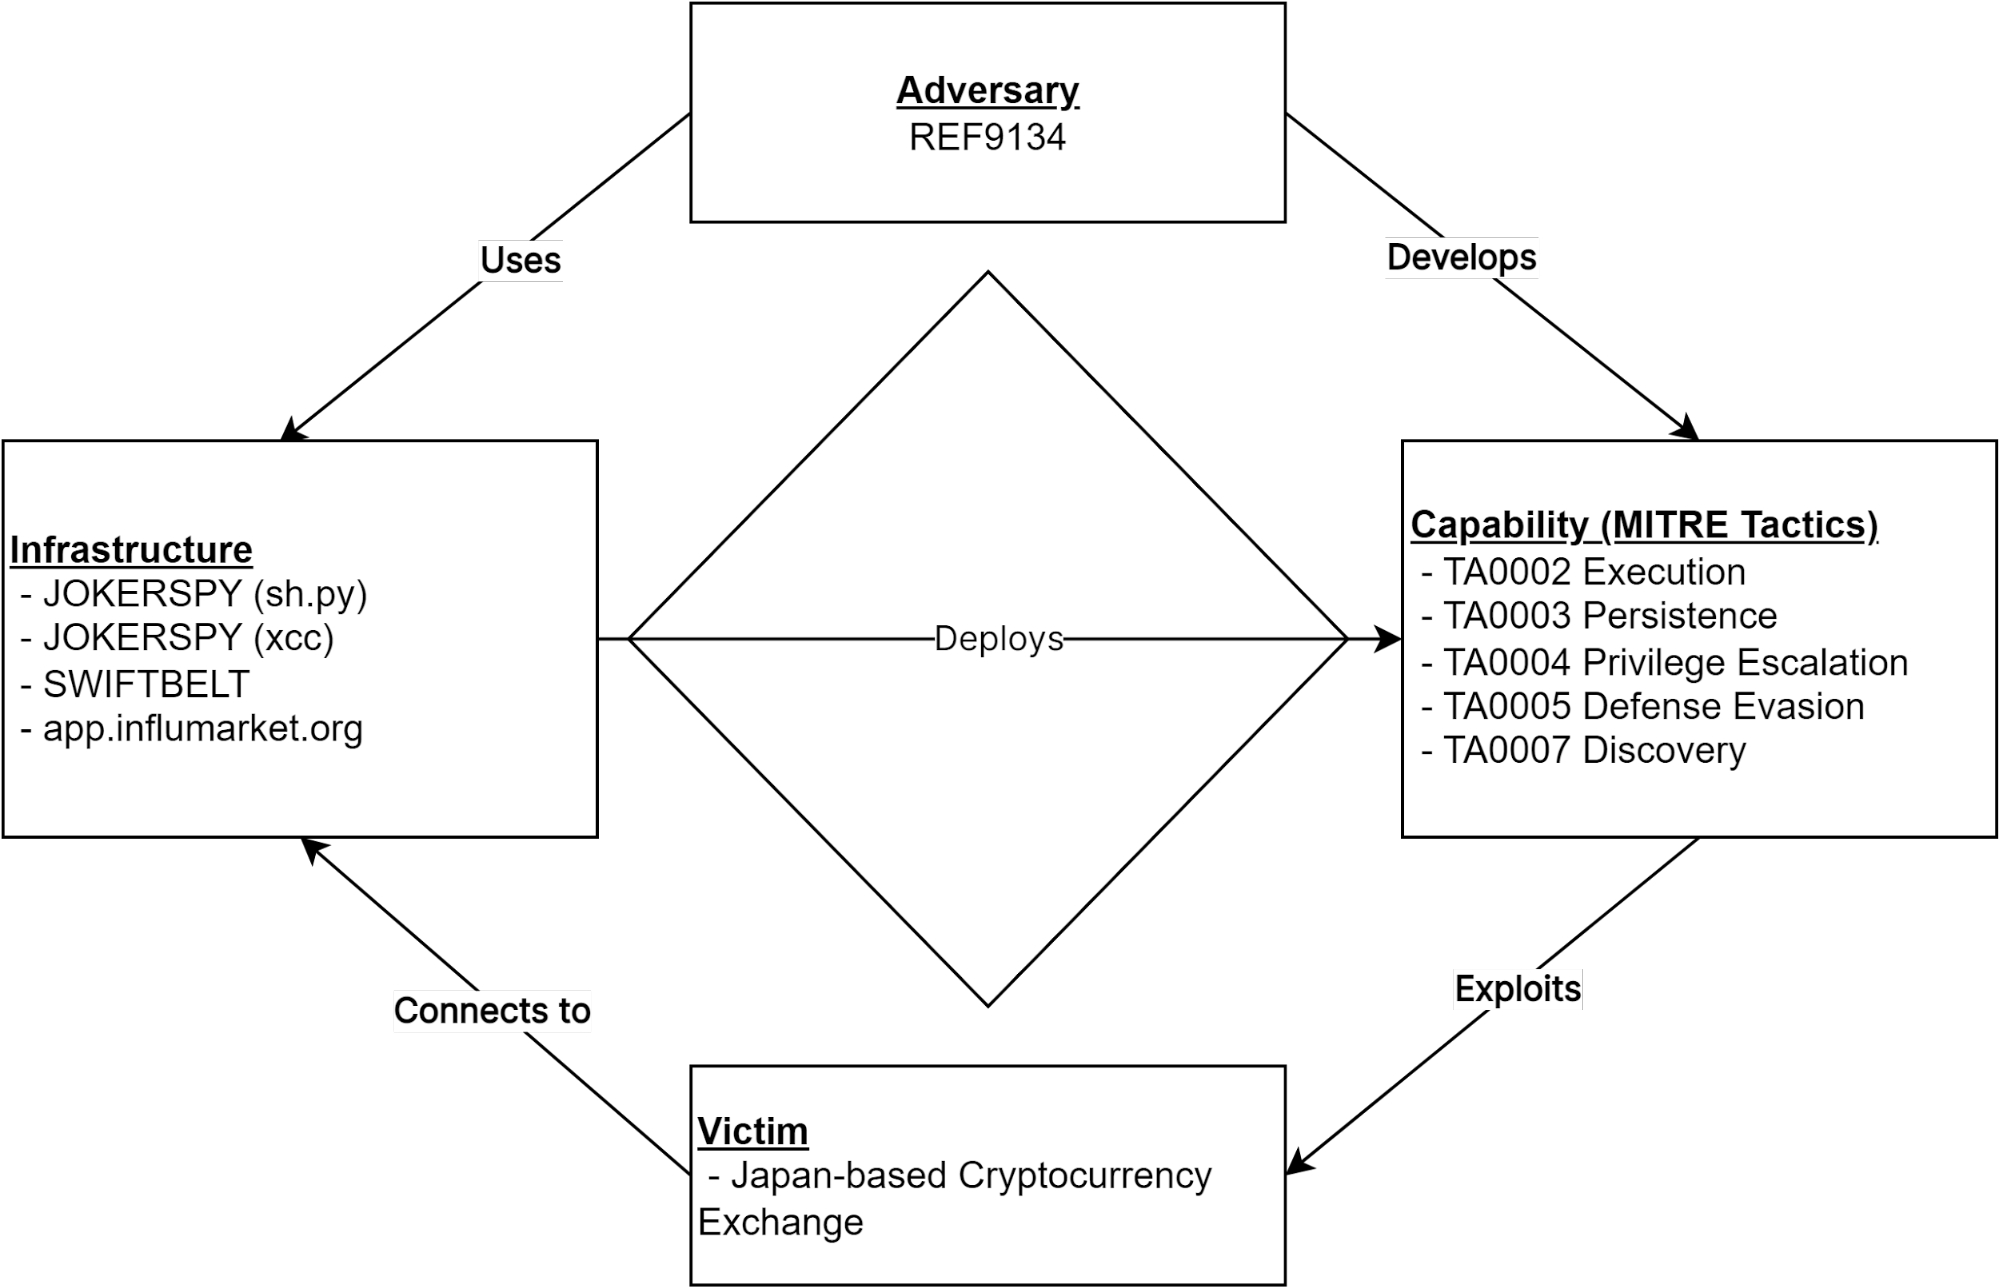 JOKERSPY used to target a cryptocurrency exchange in Japan